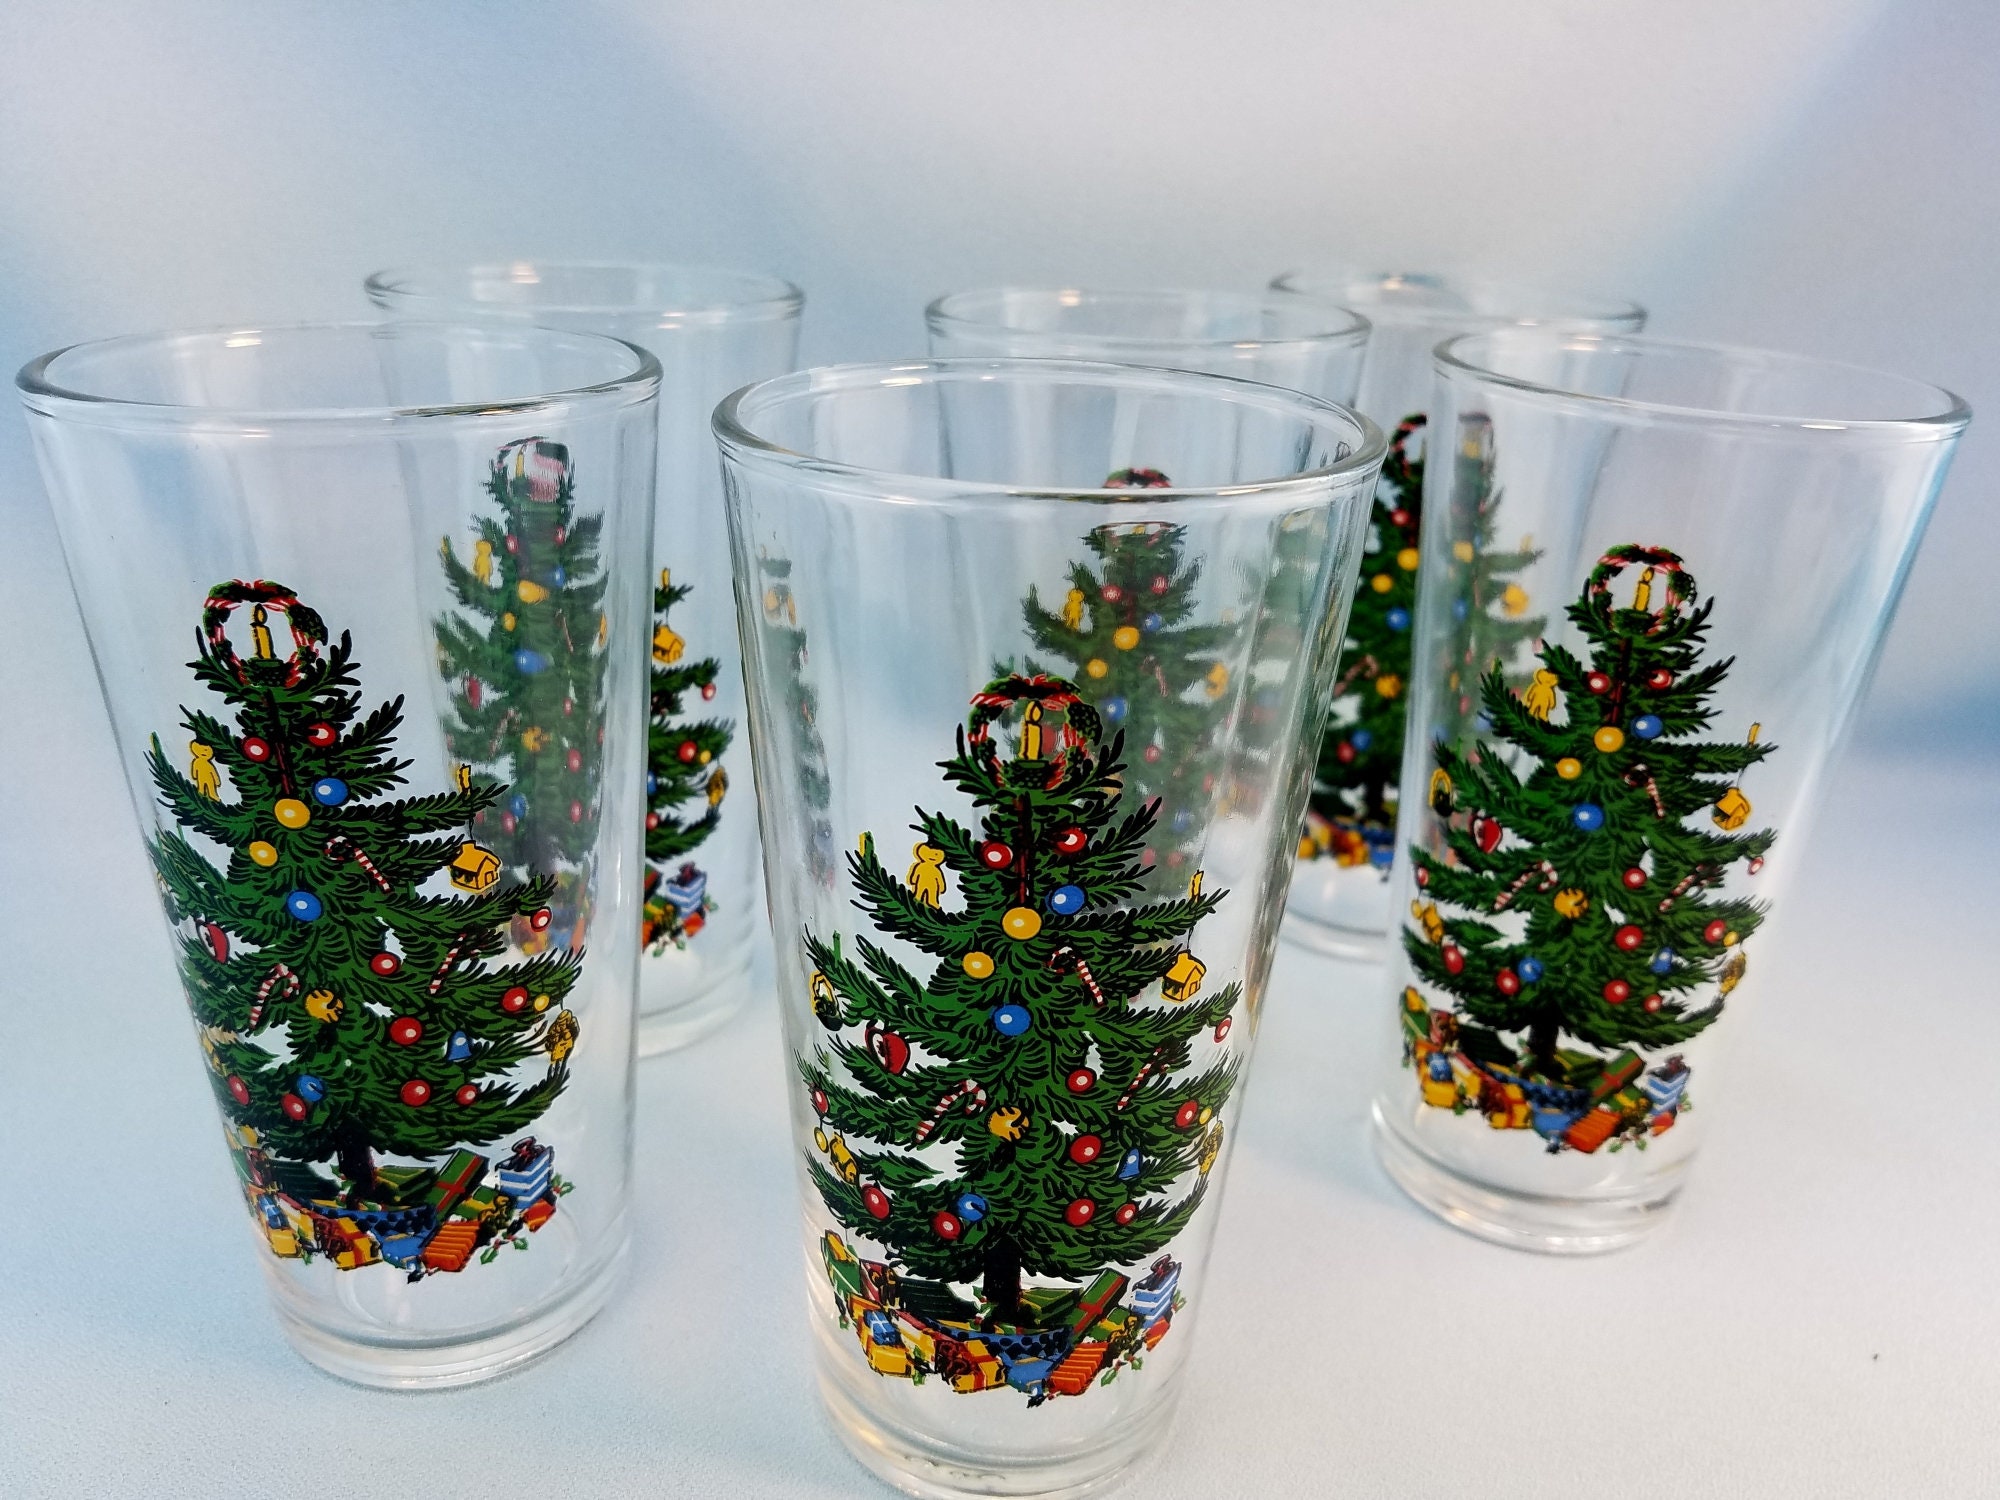 Christmas Tree Glasses, Set of 6 six, 14 Oz Holiday Tumblers, Highball,  Seasonal Entertaining, Gift 